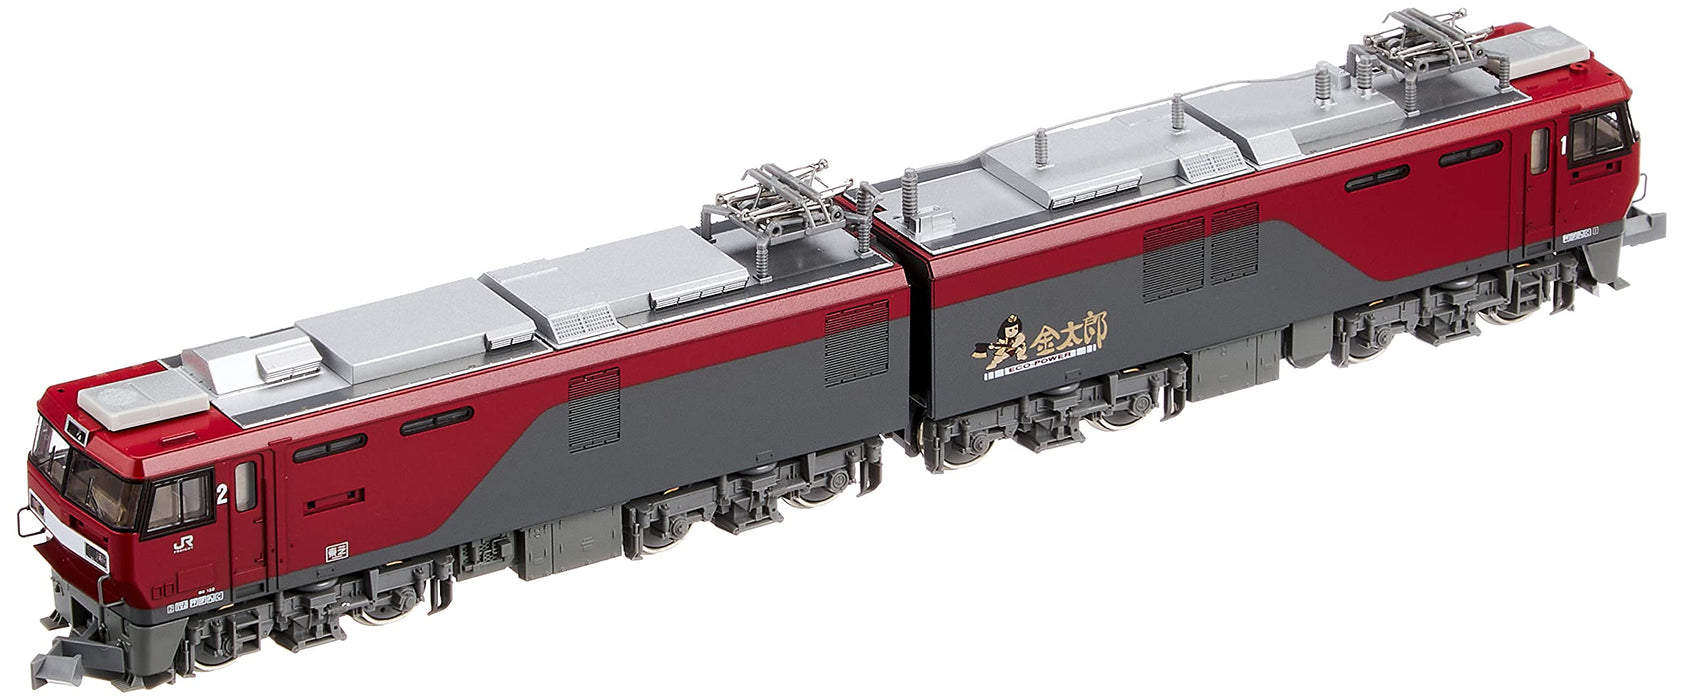 Kato N Gauge Railway Model Electric Locomotive Eh500 3D New Paint 3037-3